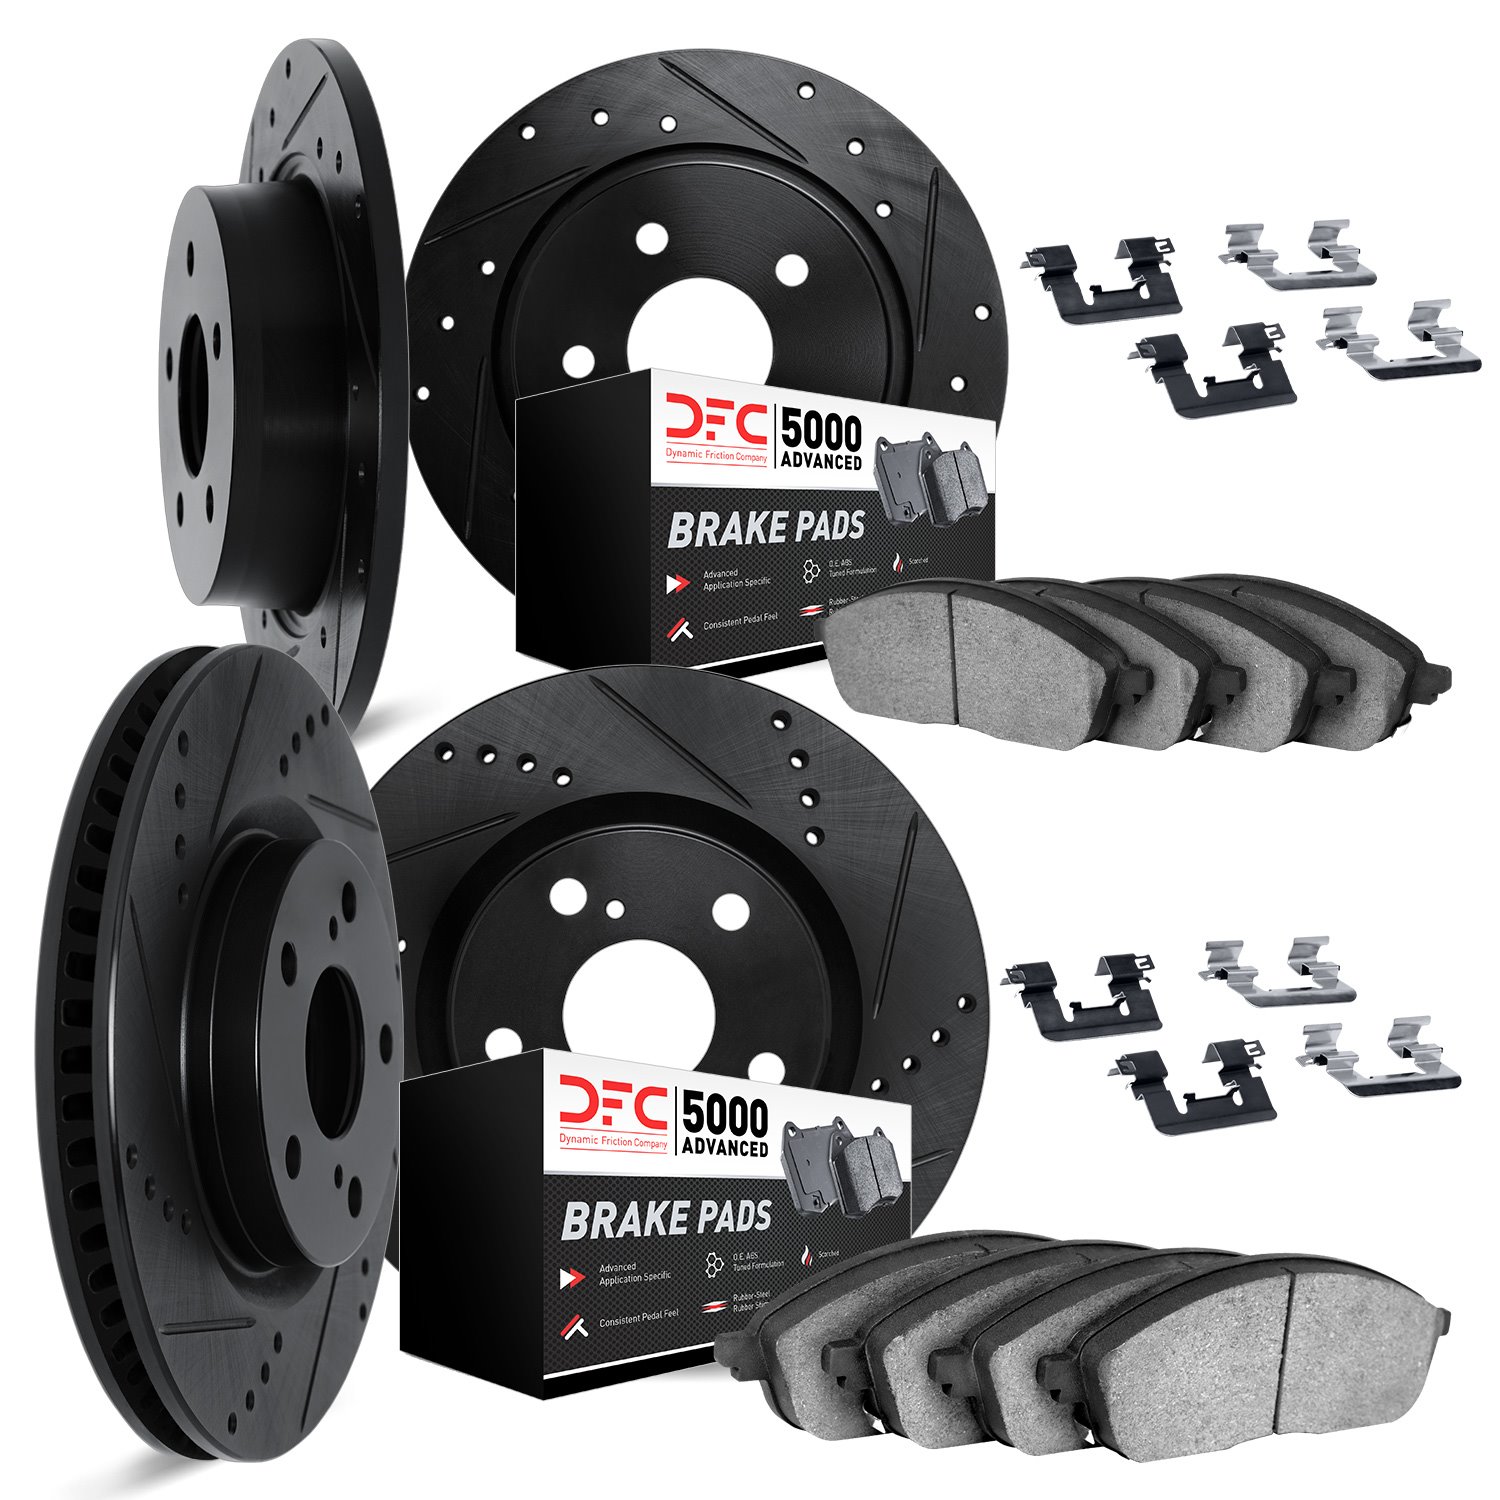 8514-40254 Drilled/Slotted Brake Rotors w/5000 Advanced Brake Pads Kit & Hardware [Black], 1990-1990 Mopar, Position: Front and